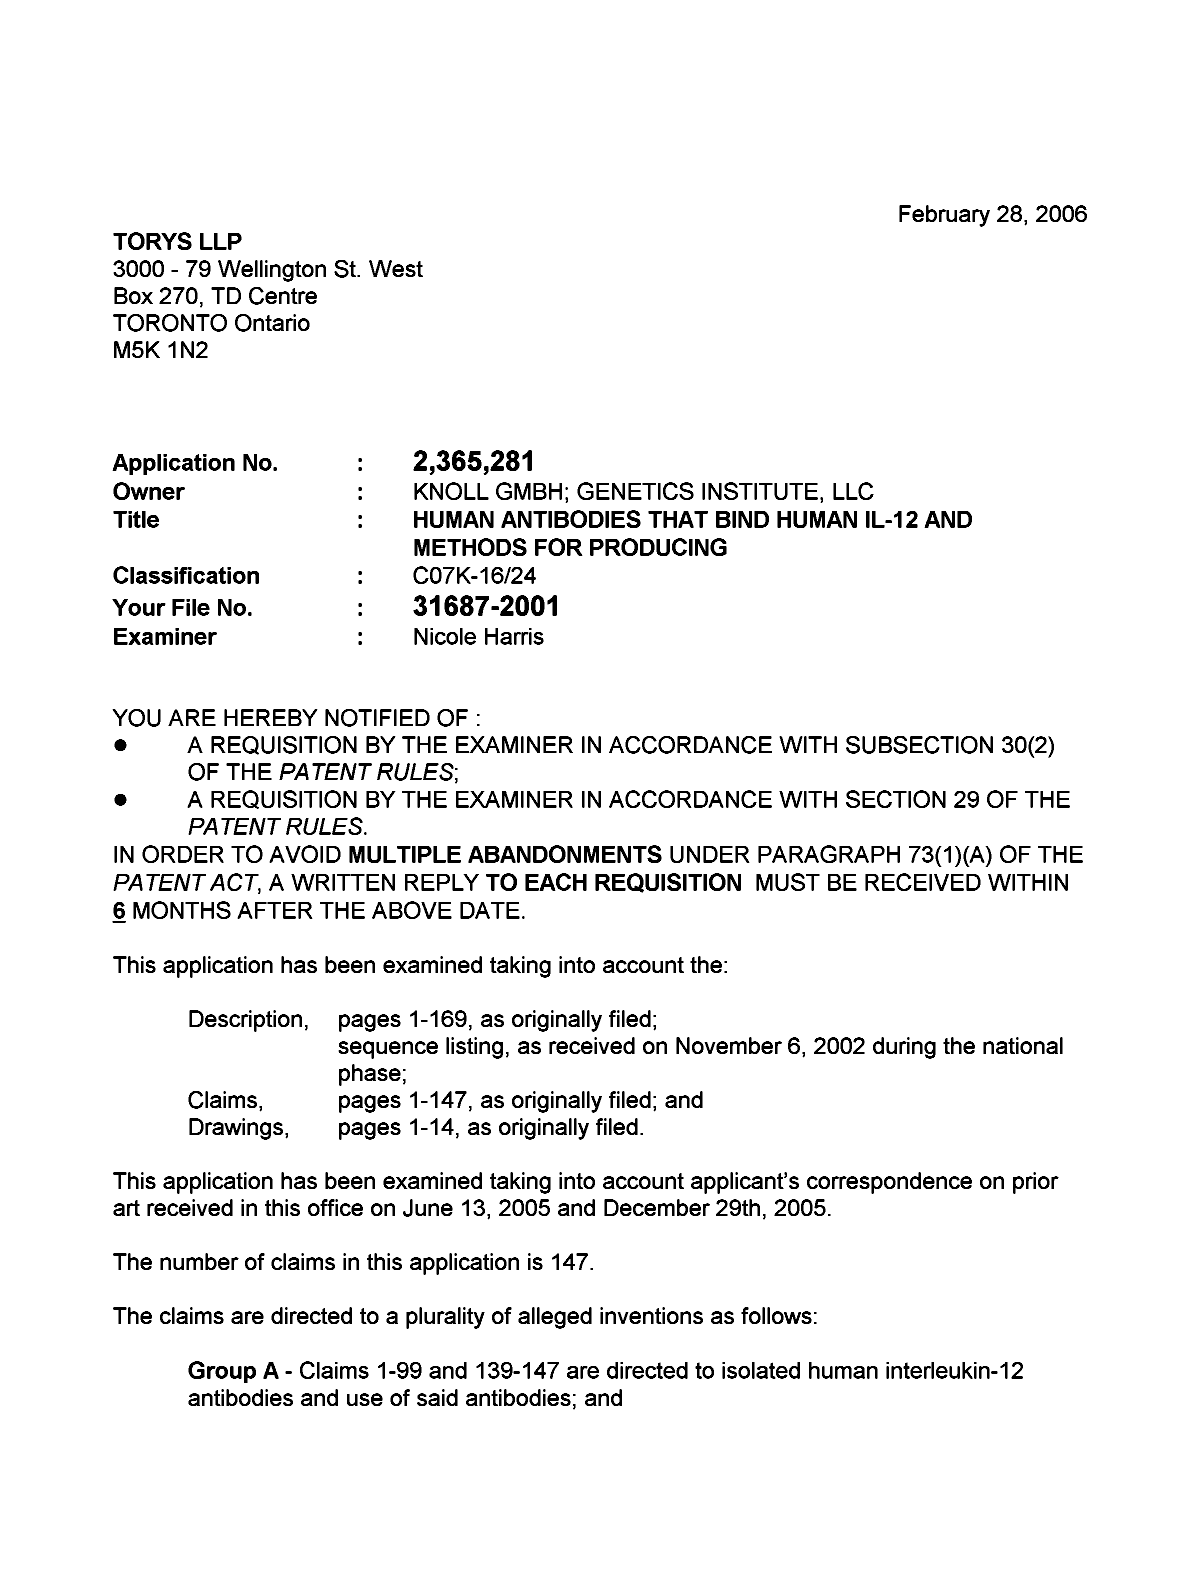 Canadian Patent Document 2365281. Prosecution-Amendment 20051228. Image 1 of 6